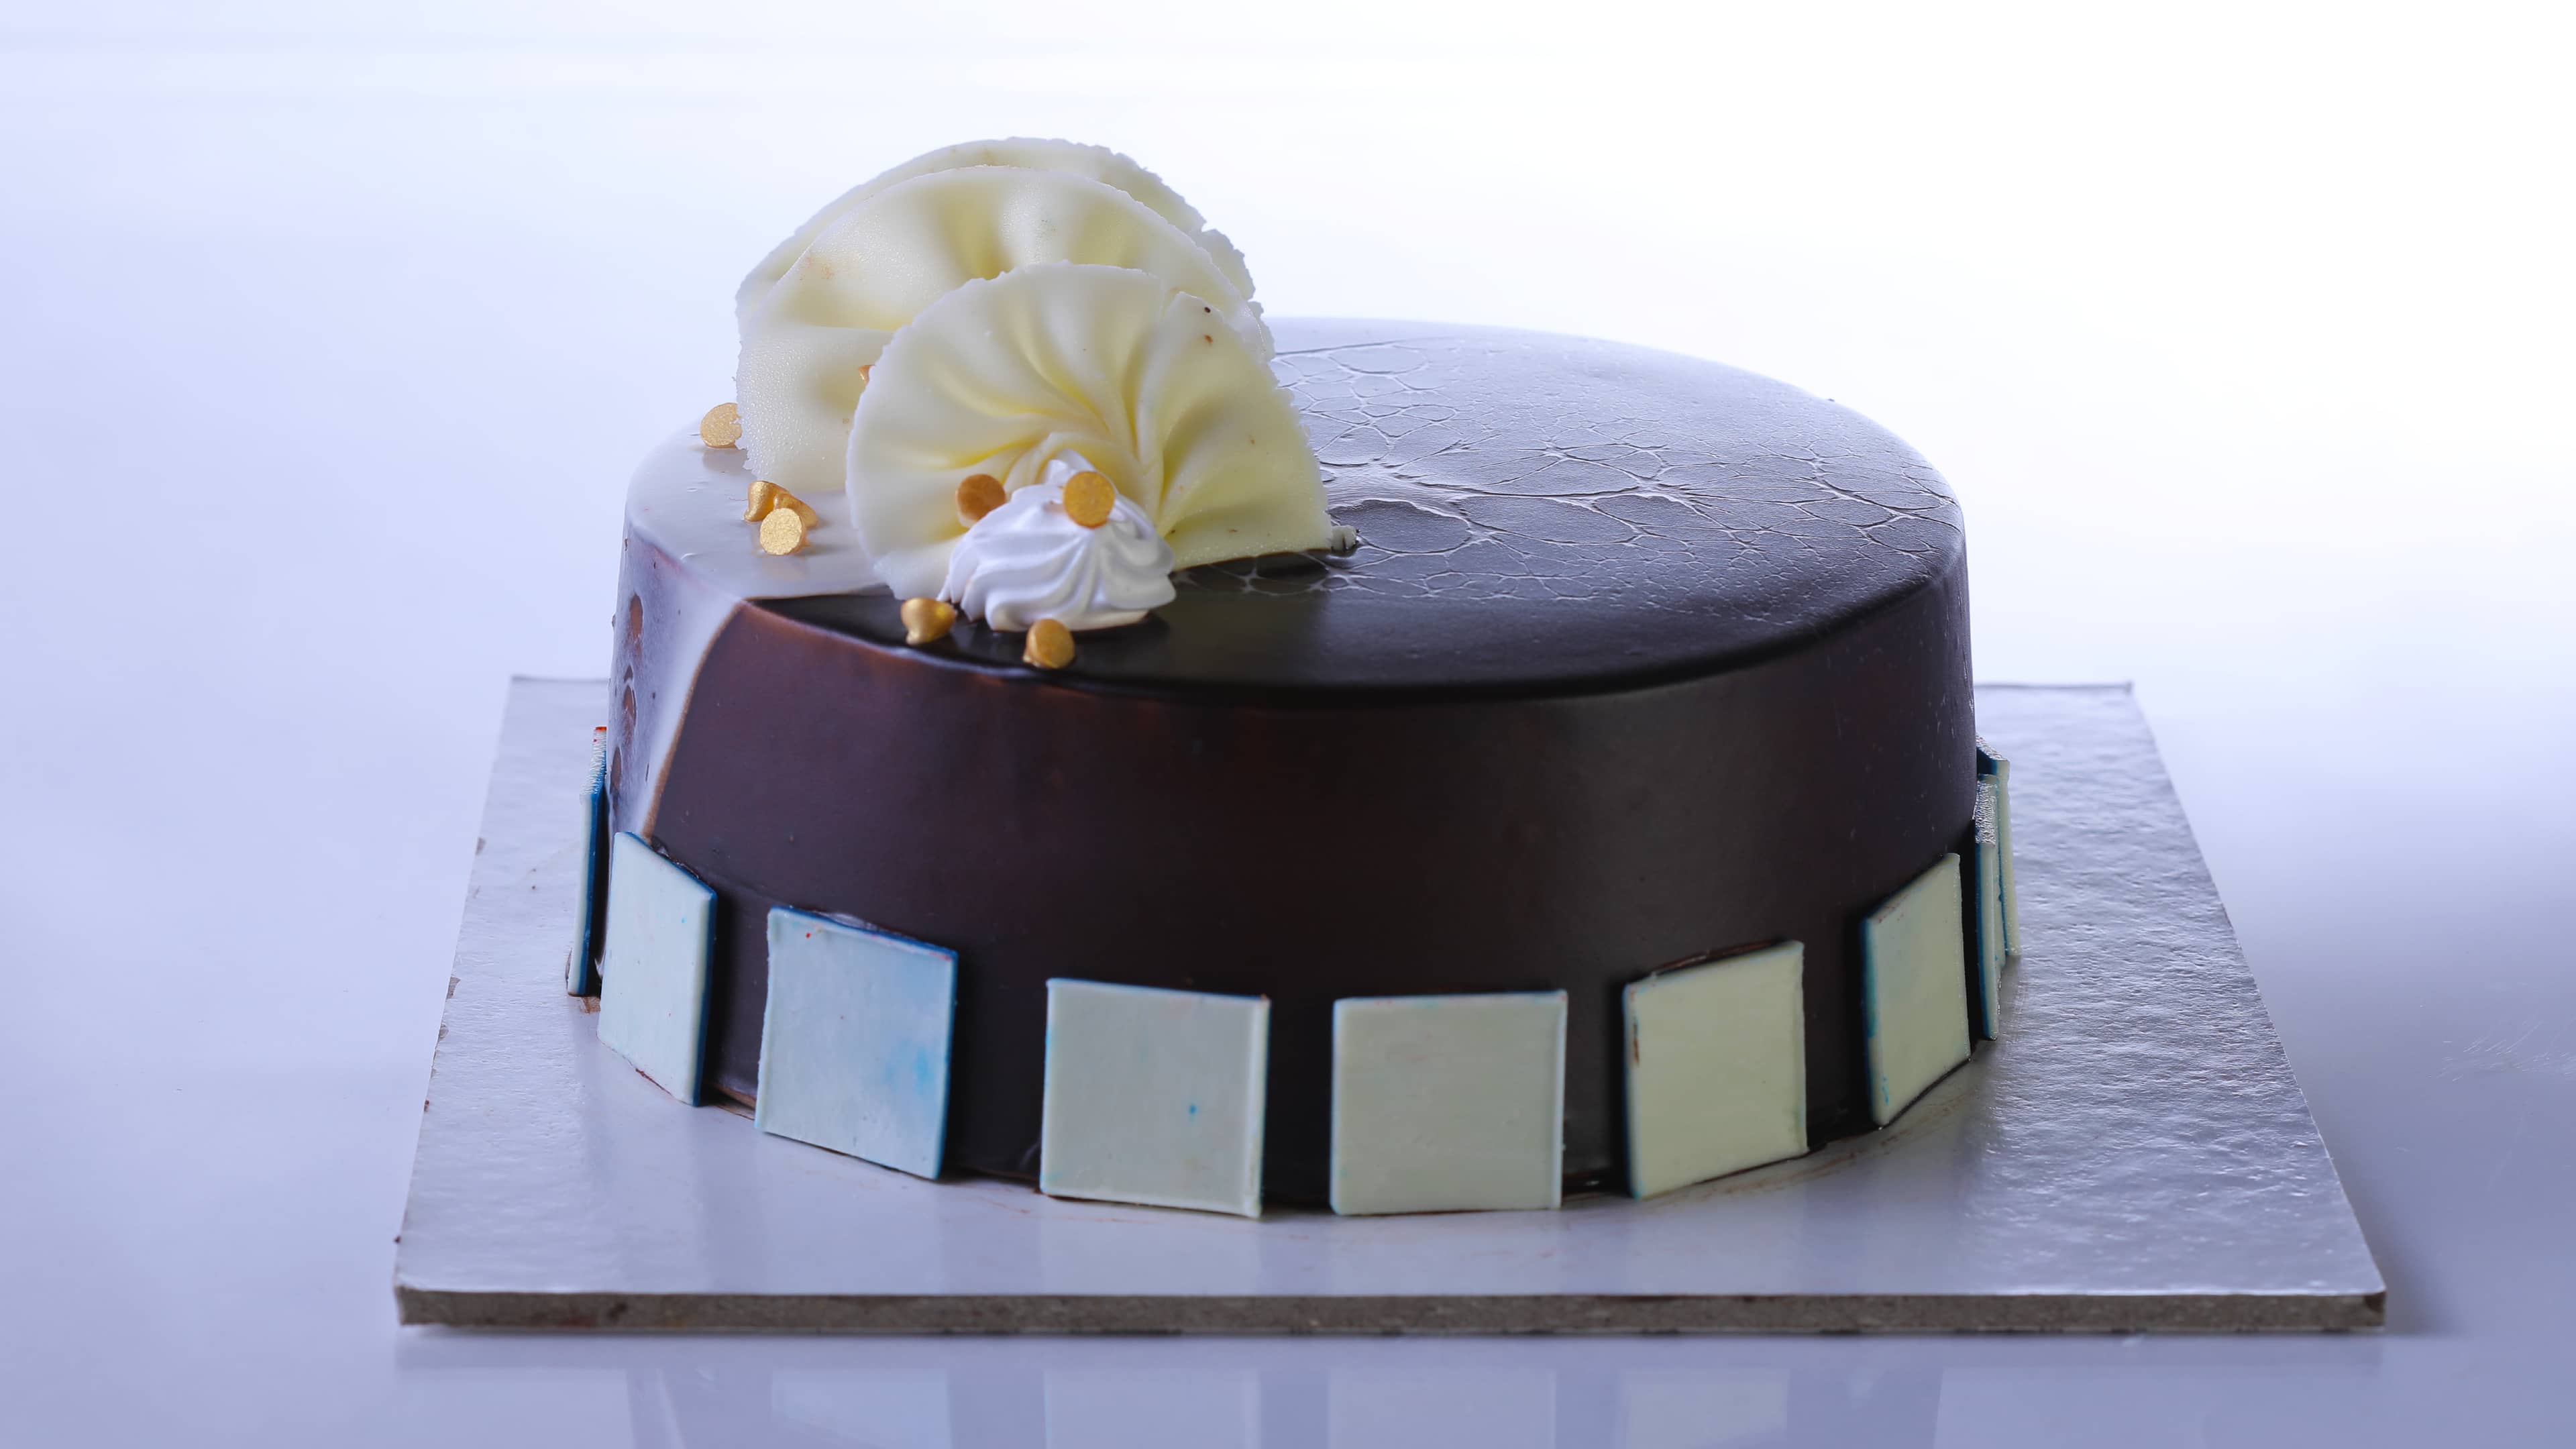 2 Ingredients Mirror Glaze Cake| No Gelatin No Agar Agar |homemade - YouTube